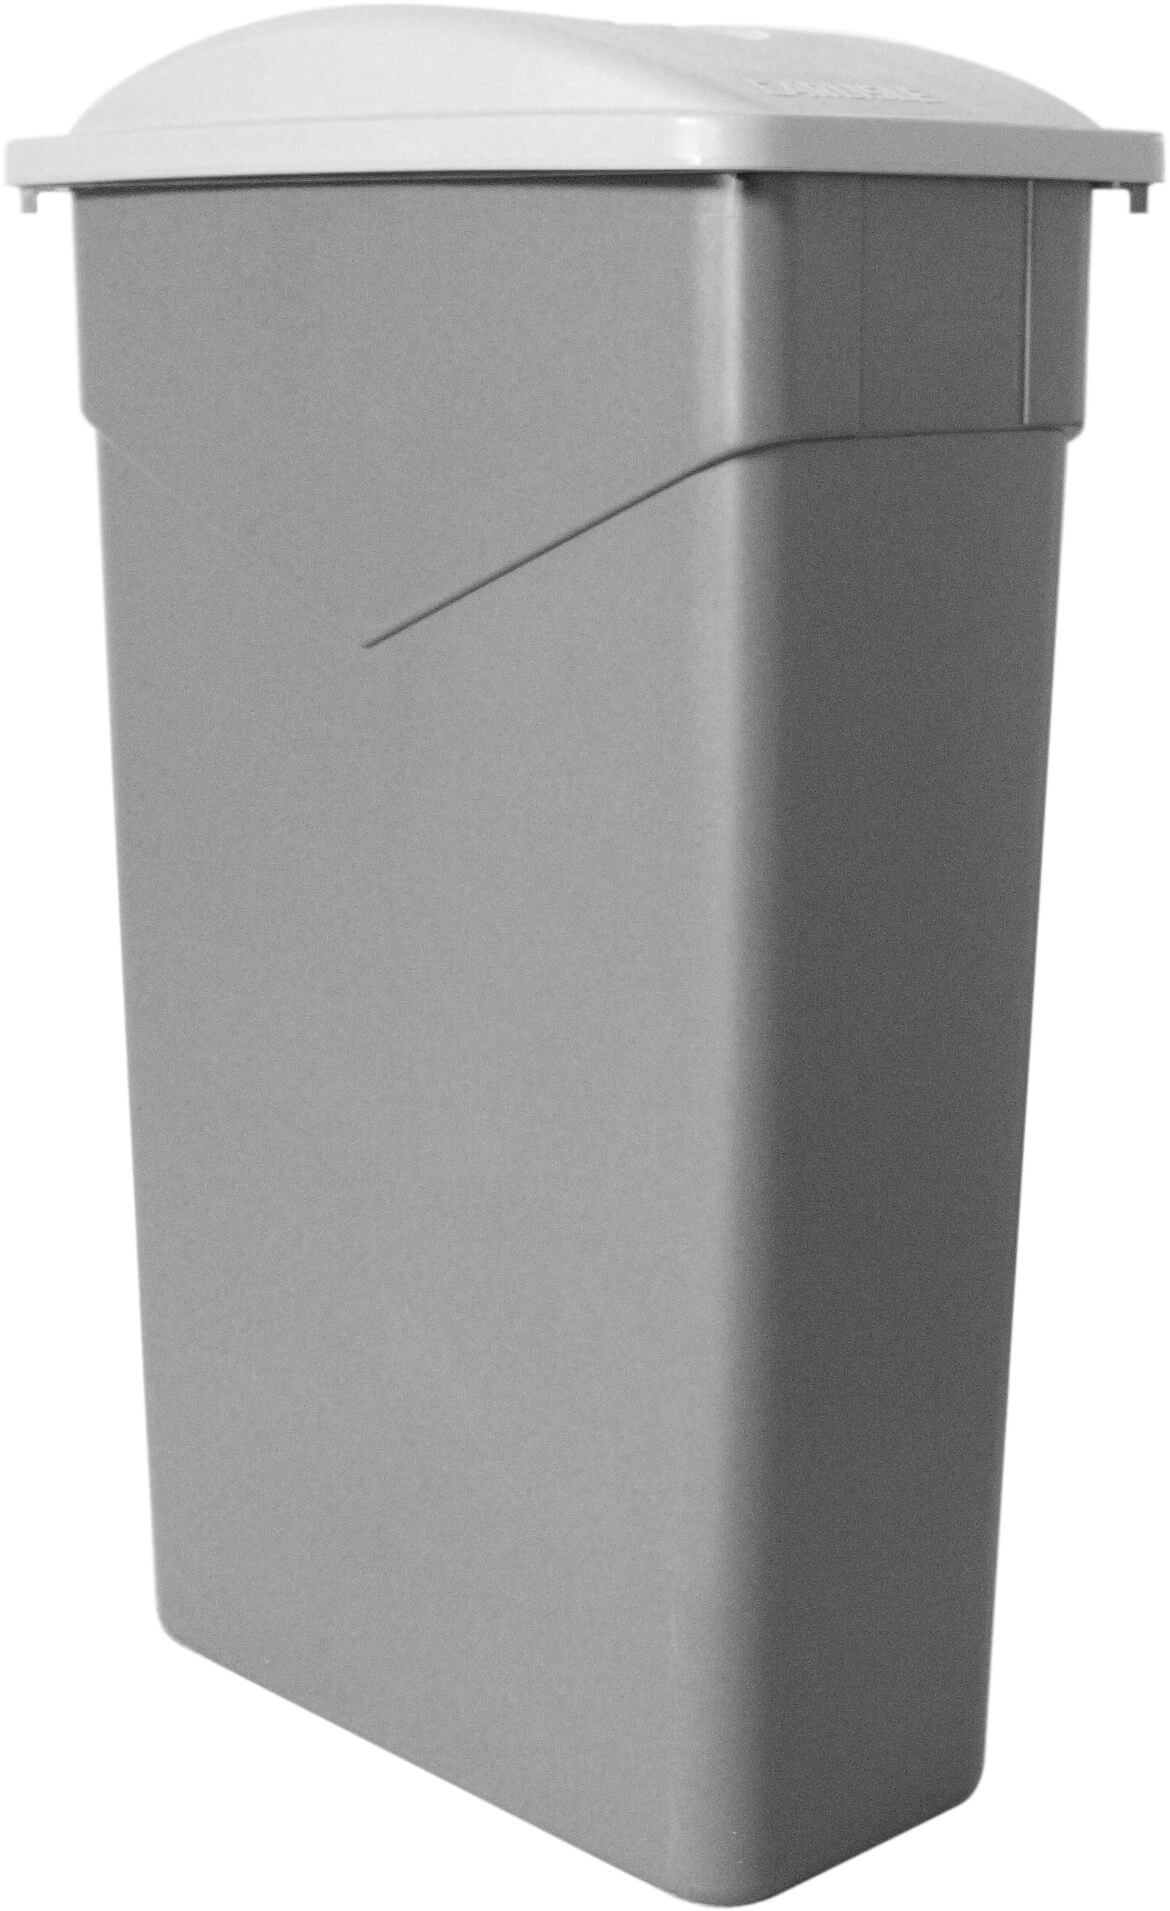 Abfallbehälter 87l - Eimer + Deckel, Kunststoff